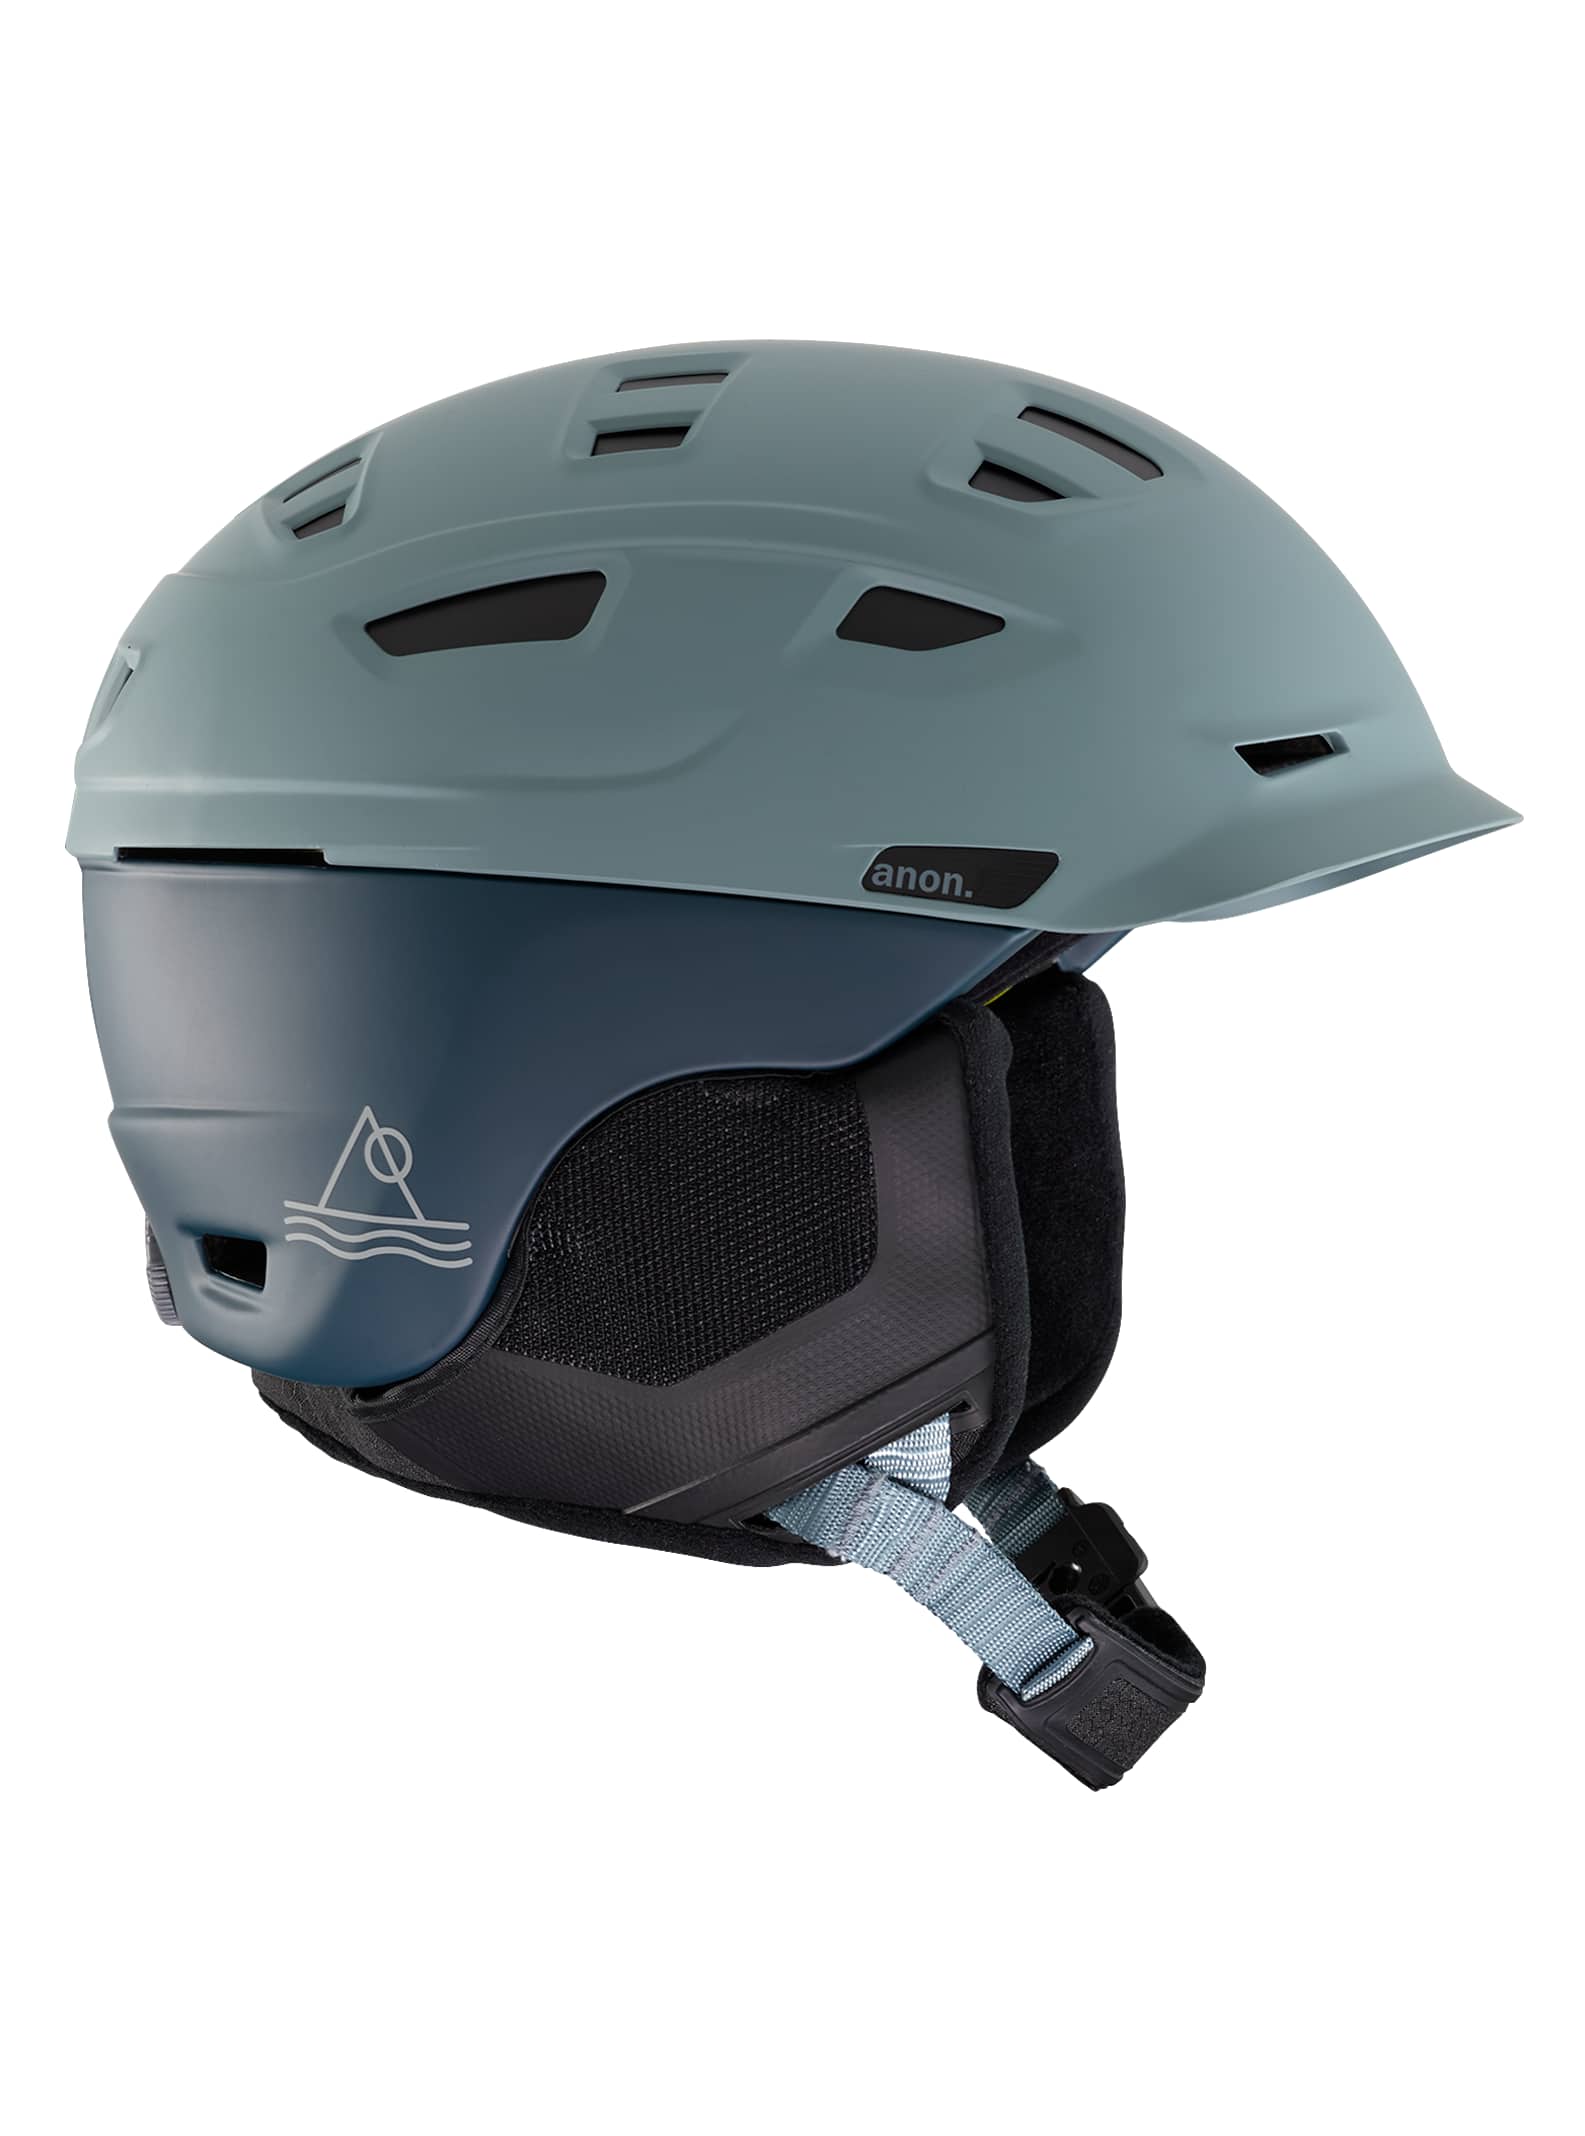 Men's Anon Prime MIPS Helmet | Burton.com Winter 2020 US